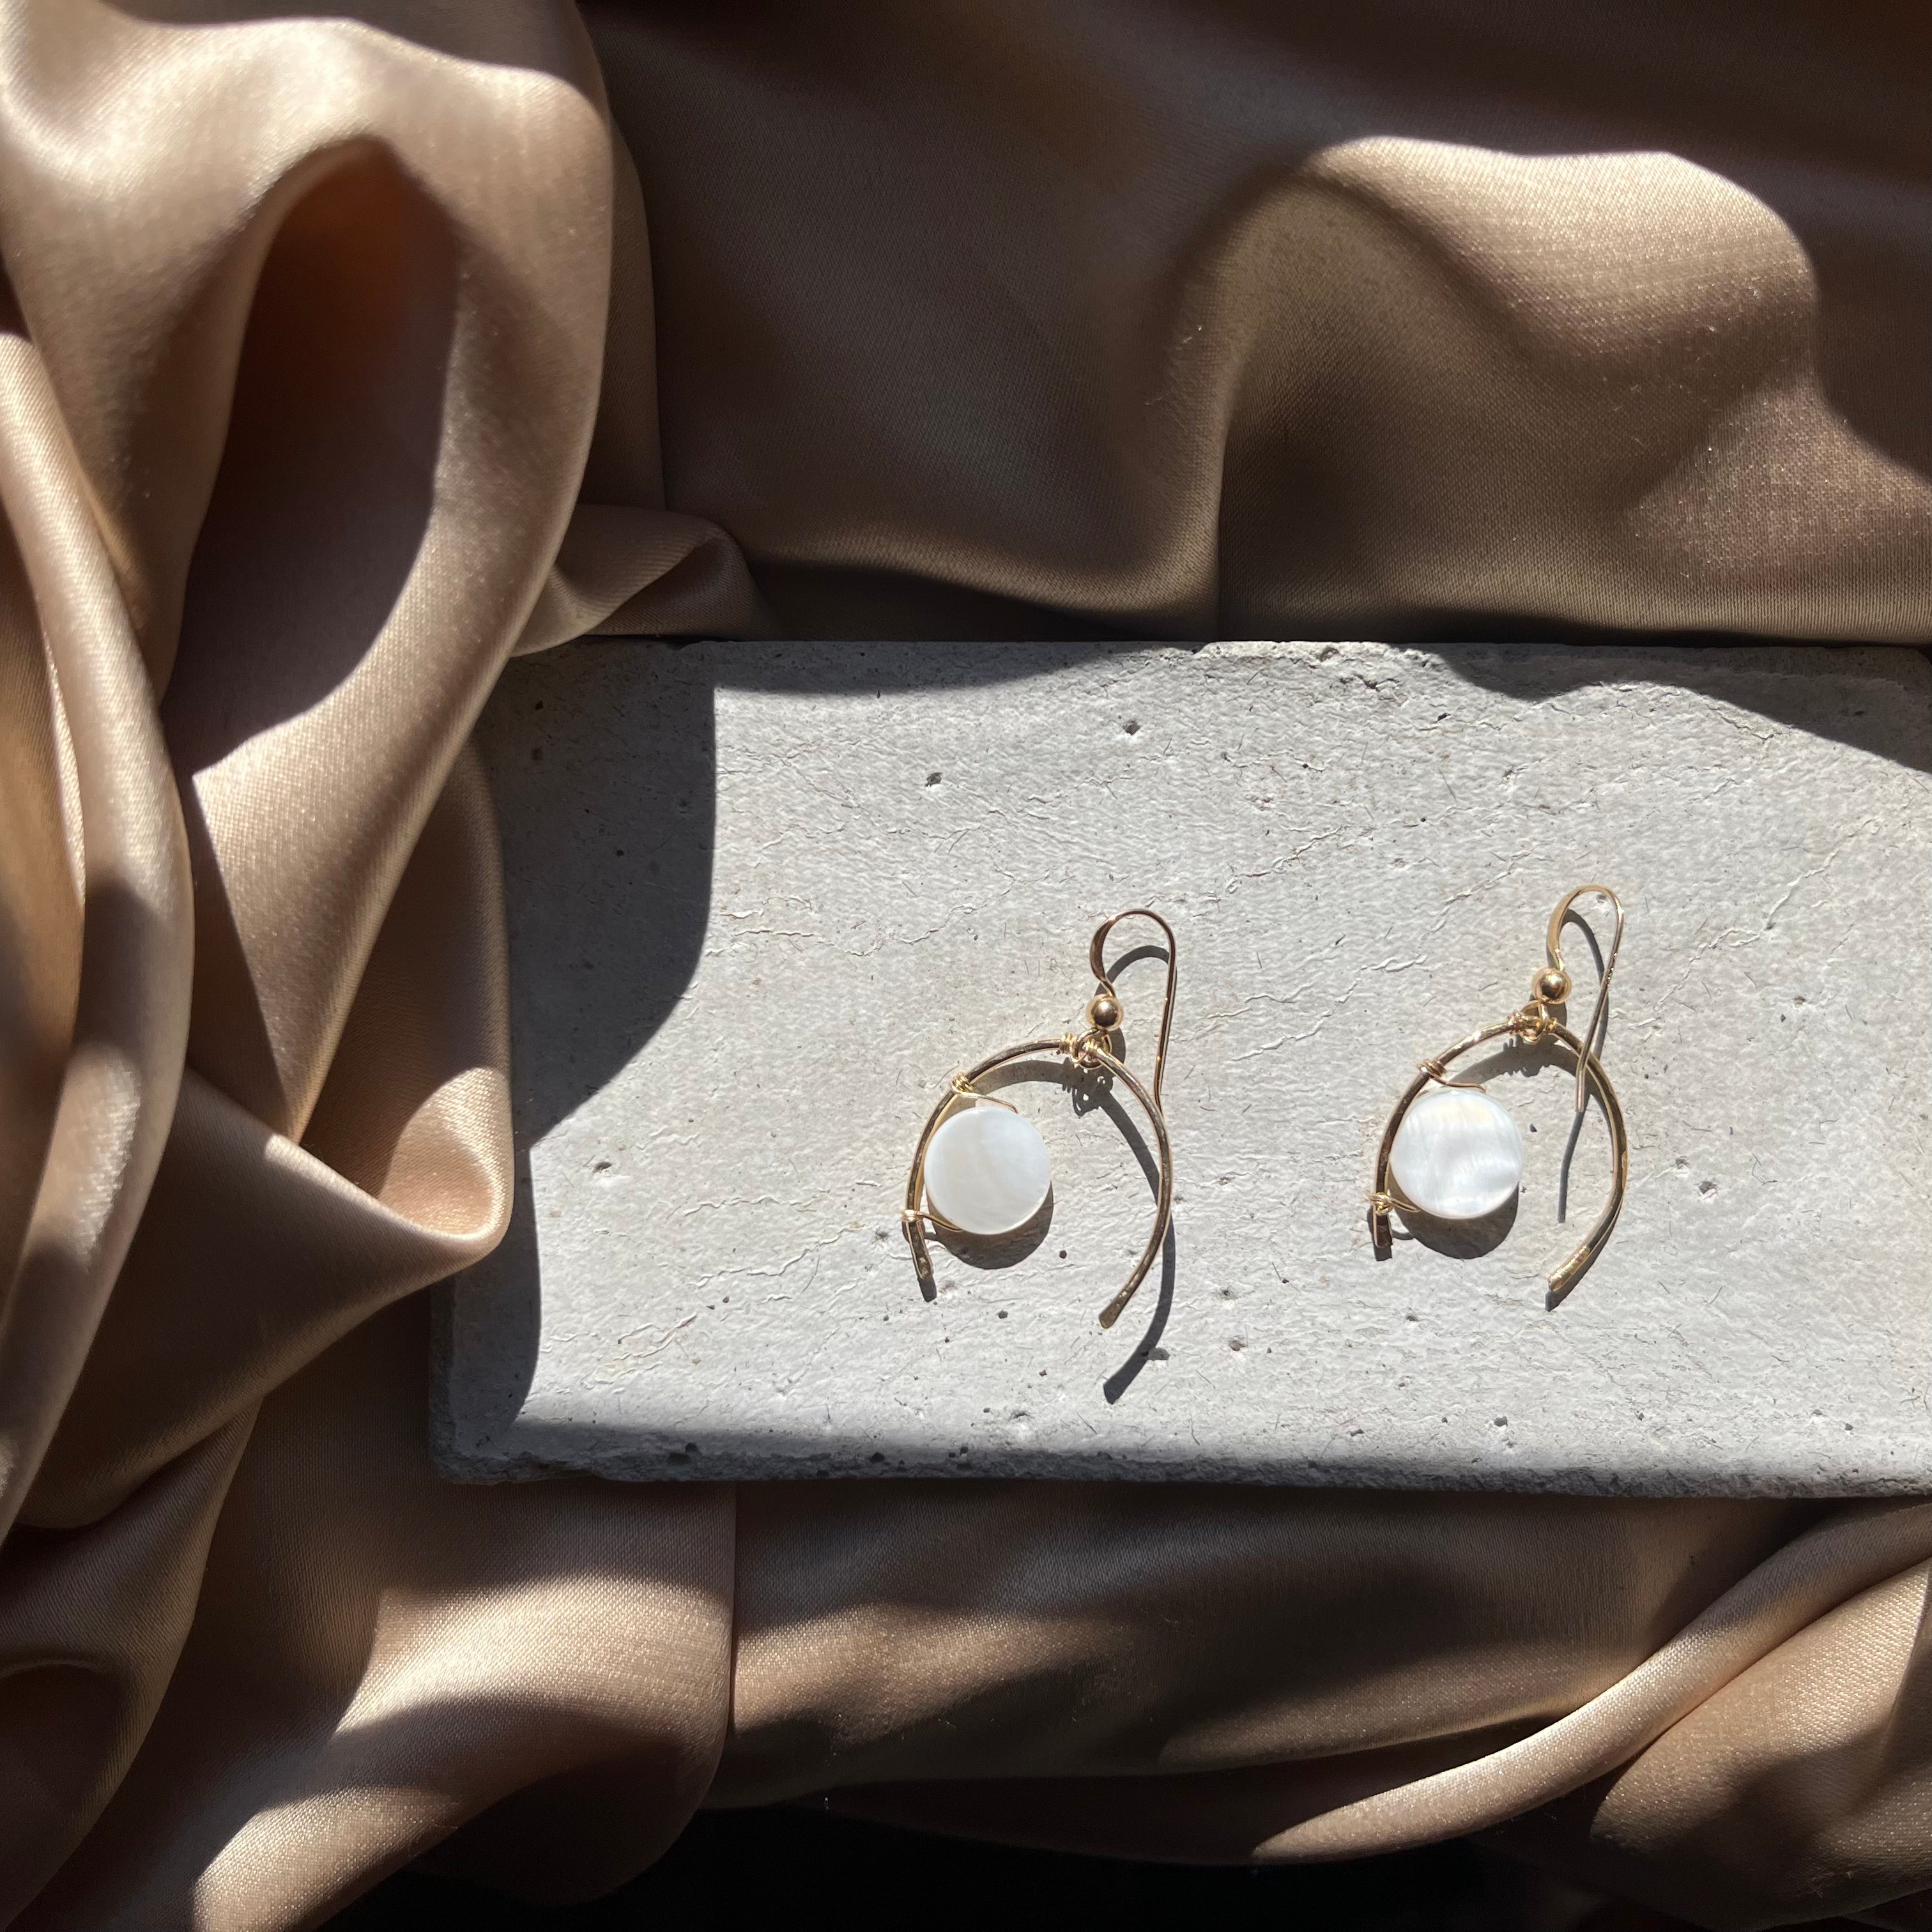 Over the Moon Horseshoe Shaped 14k Gold-FIlled Earrings